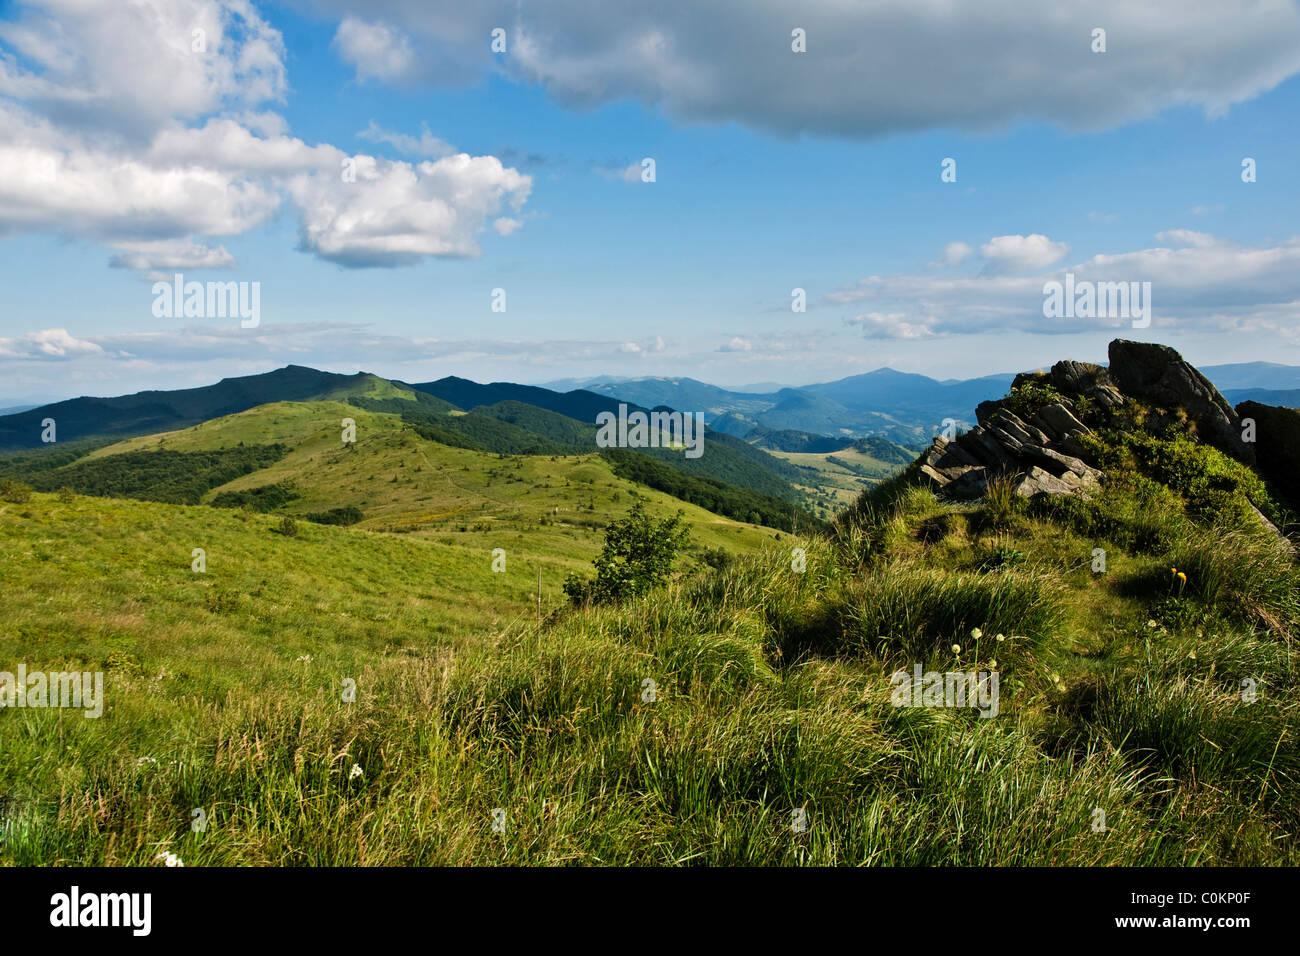 Verdi colline in polacco Bieszczady montagna Foto Stock